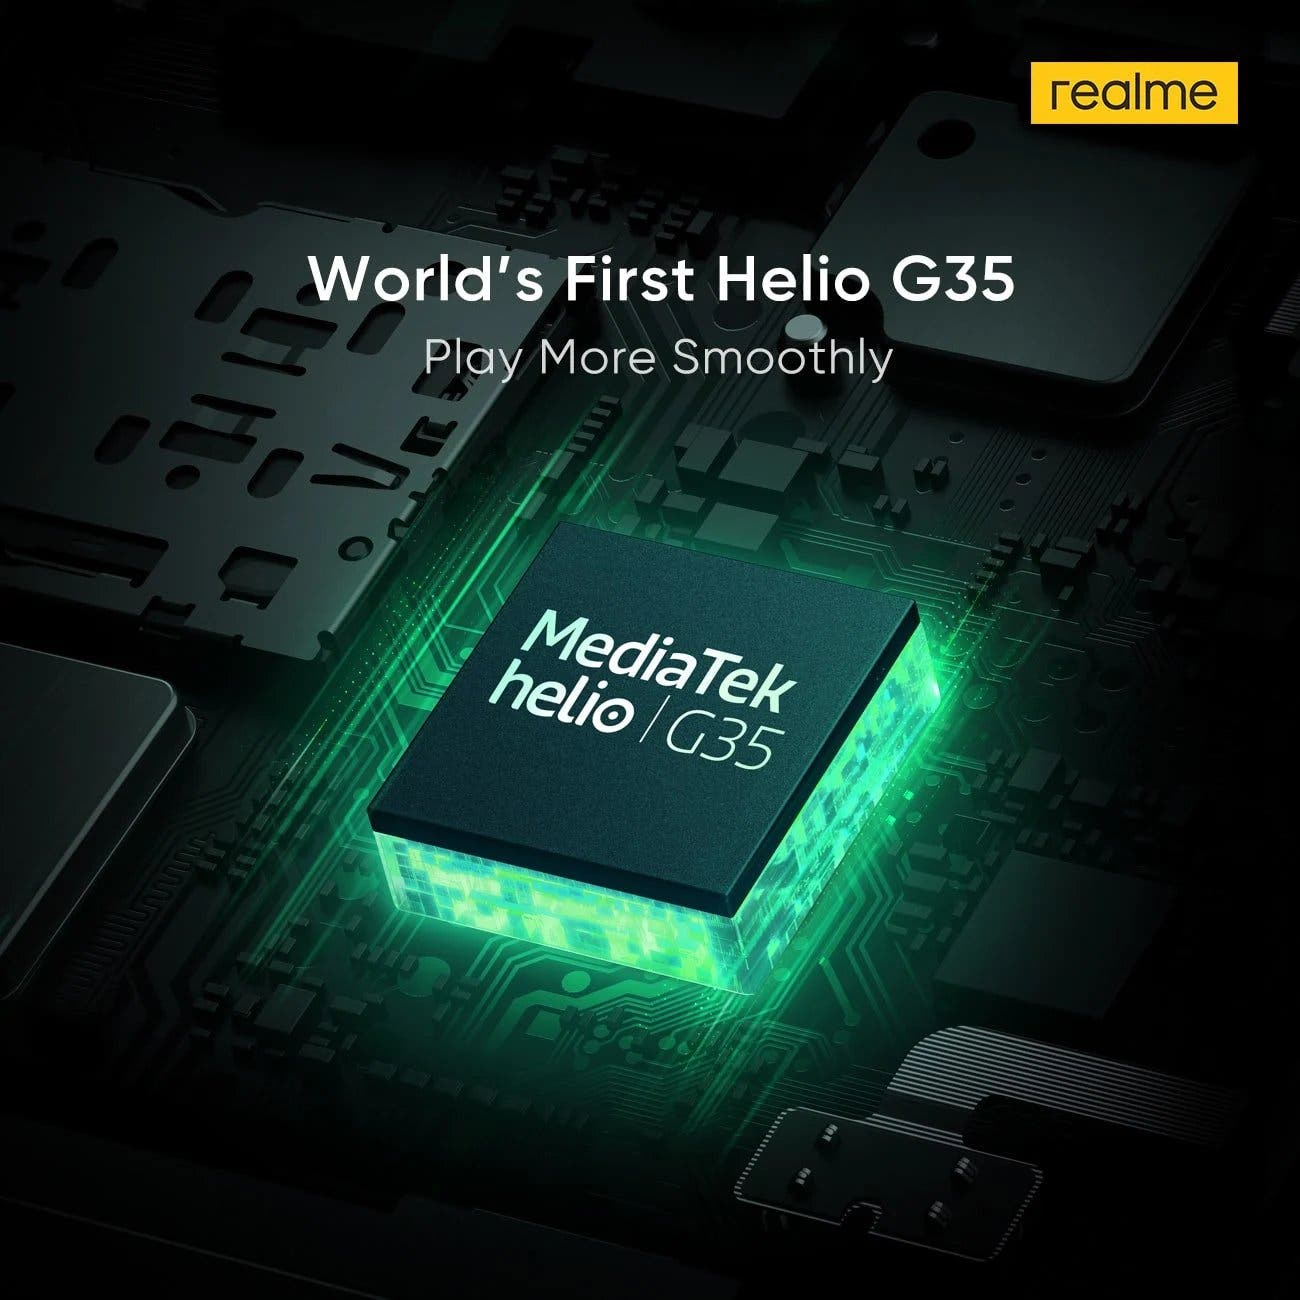 Realme C11 first smartphone with MediaTek Helio G35